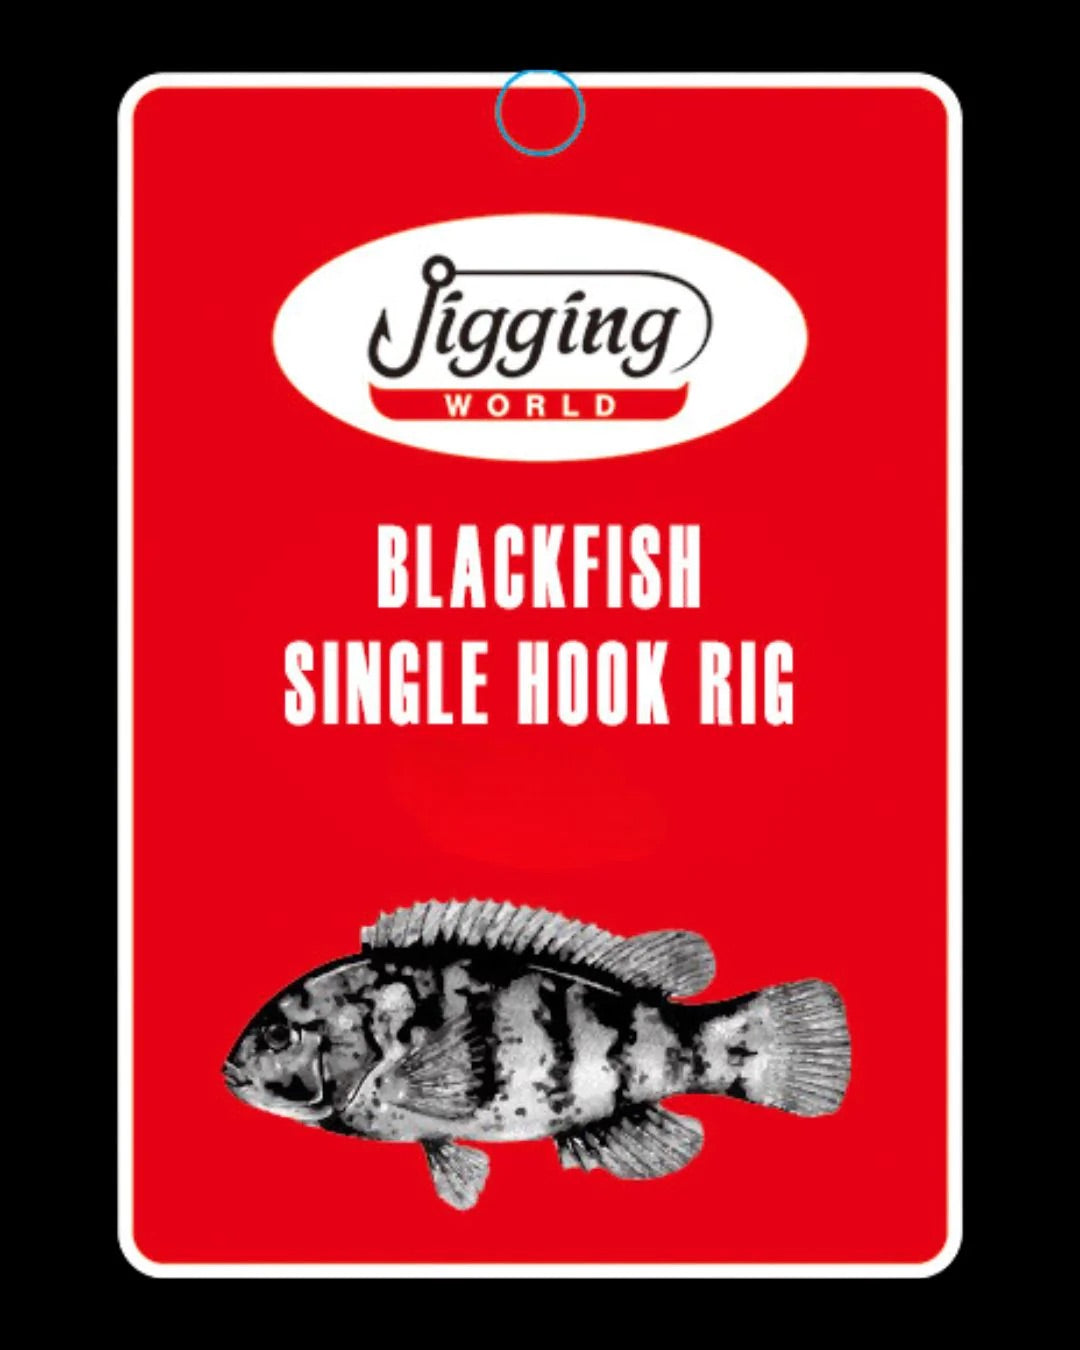 Jigging World - Blackfish Single Hook Rigs